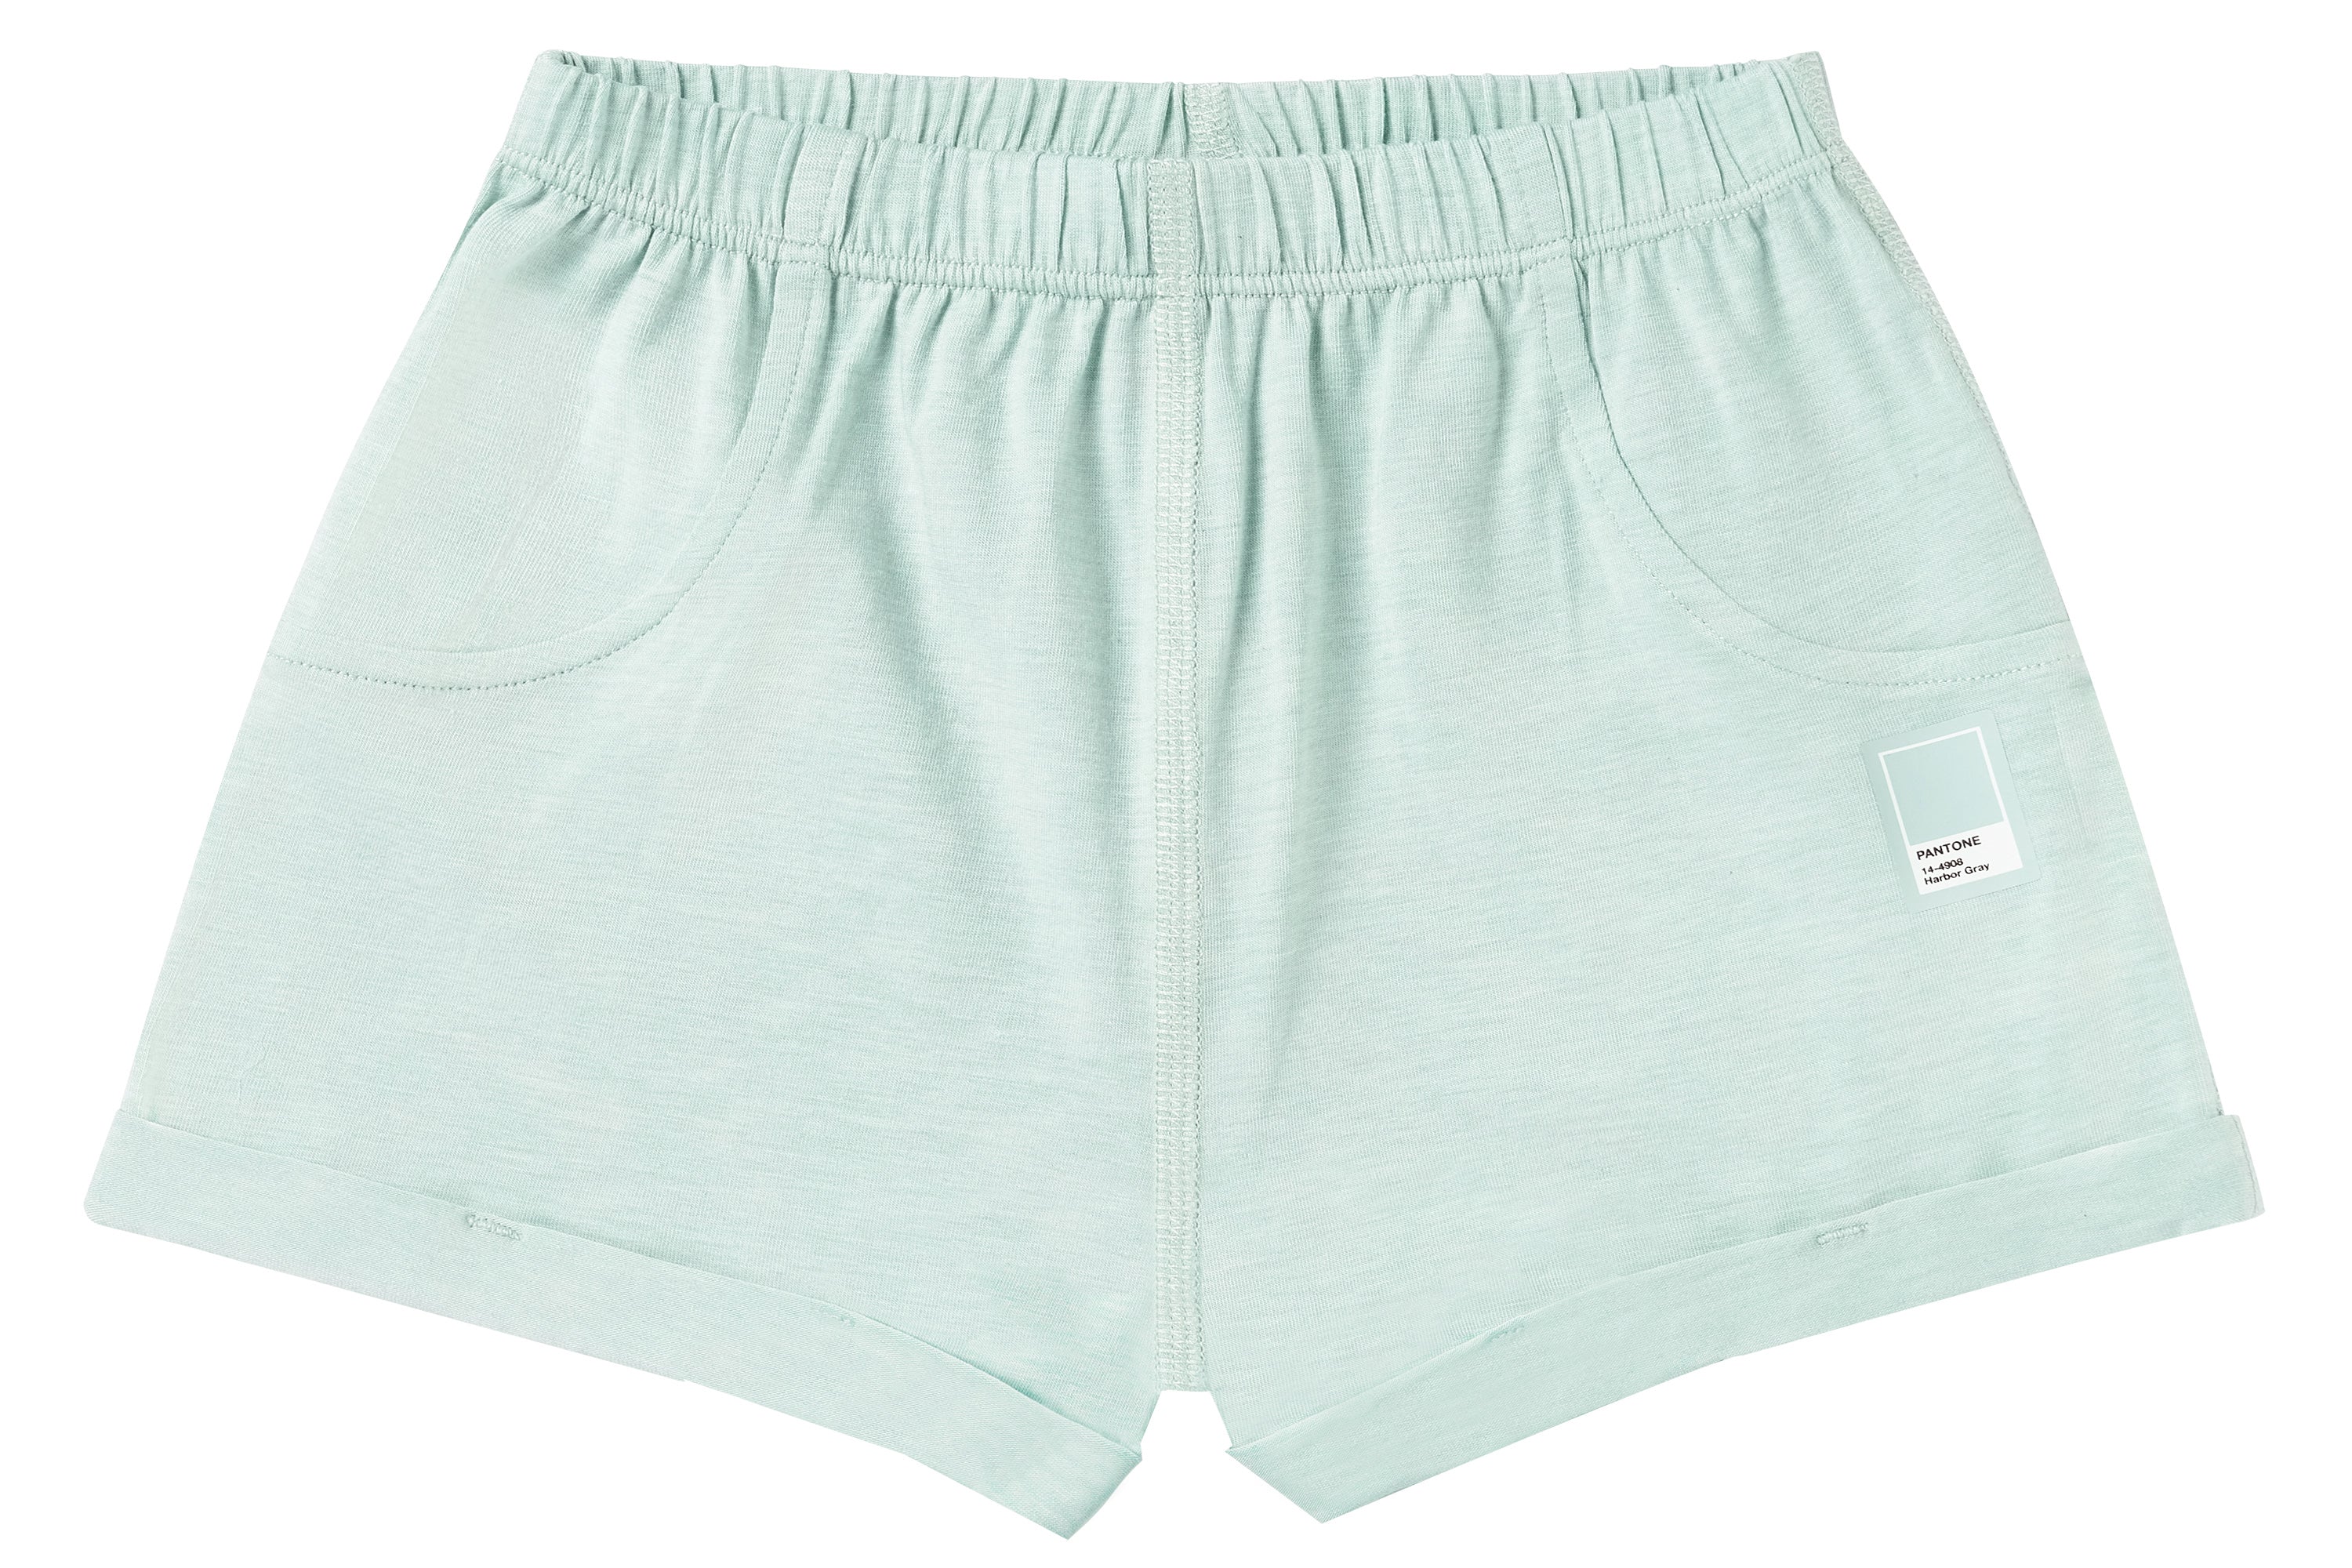 Bamboo Jersey Shorts - Pantone Harbor Gray